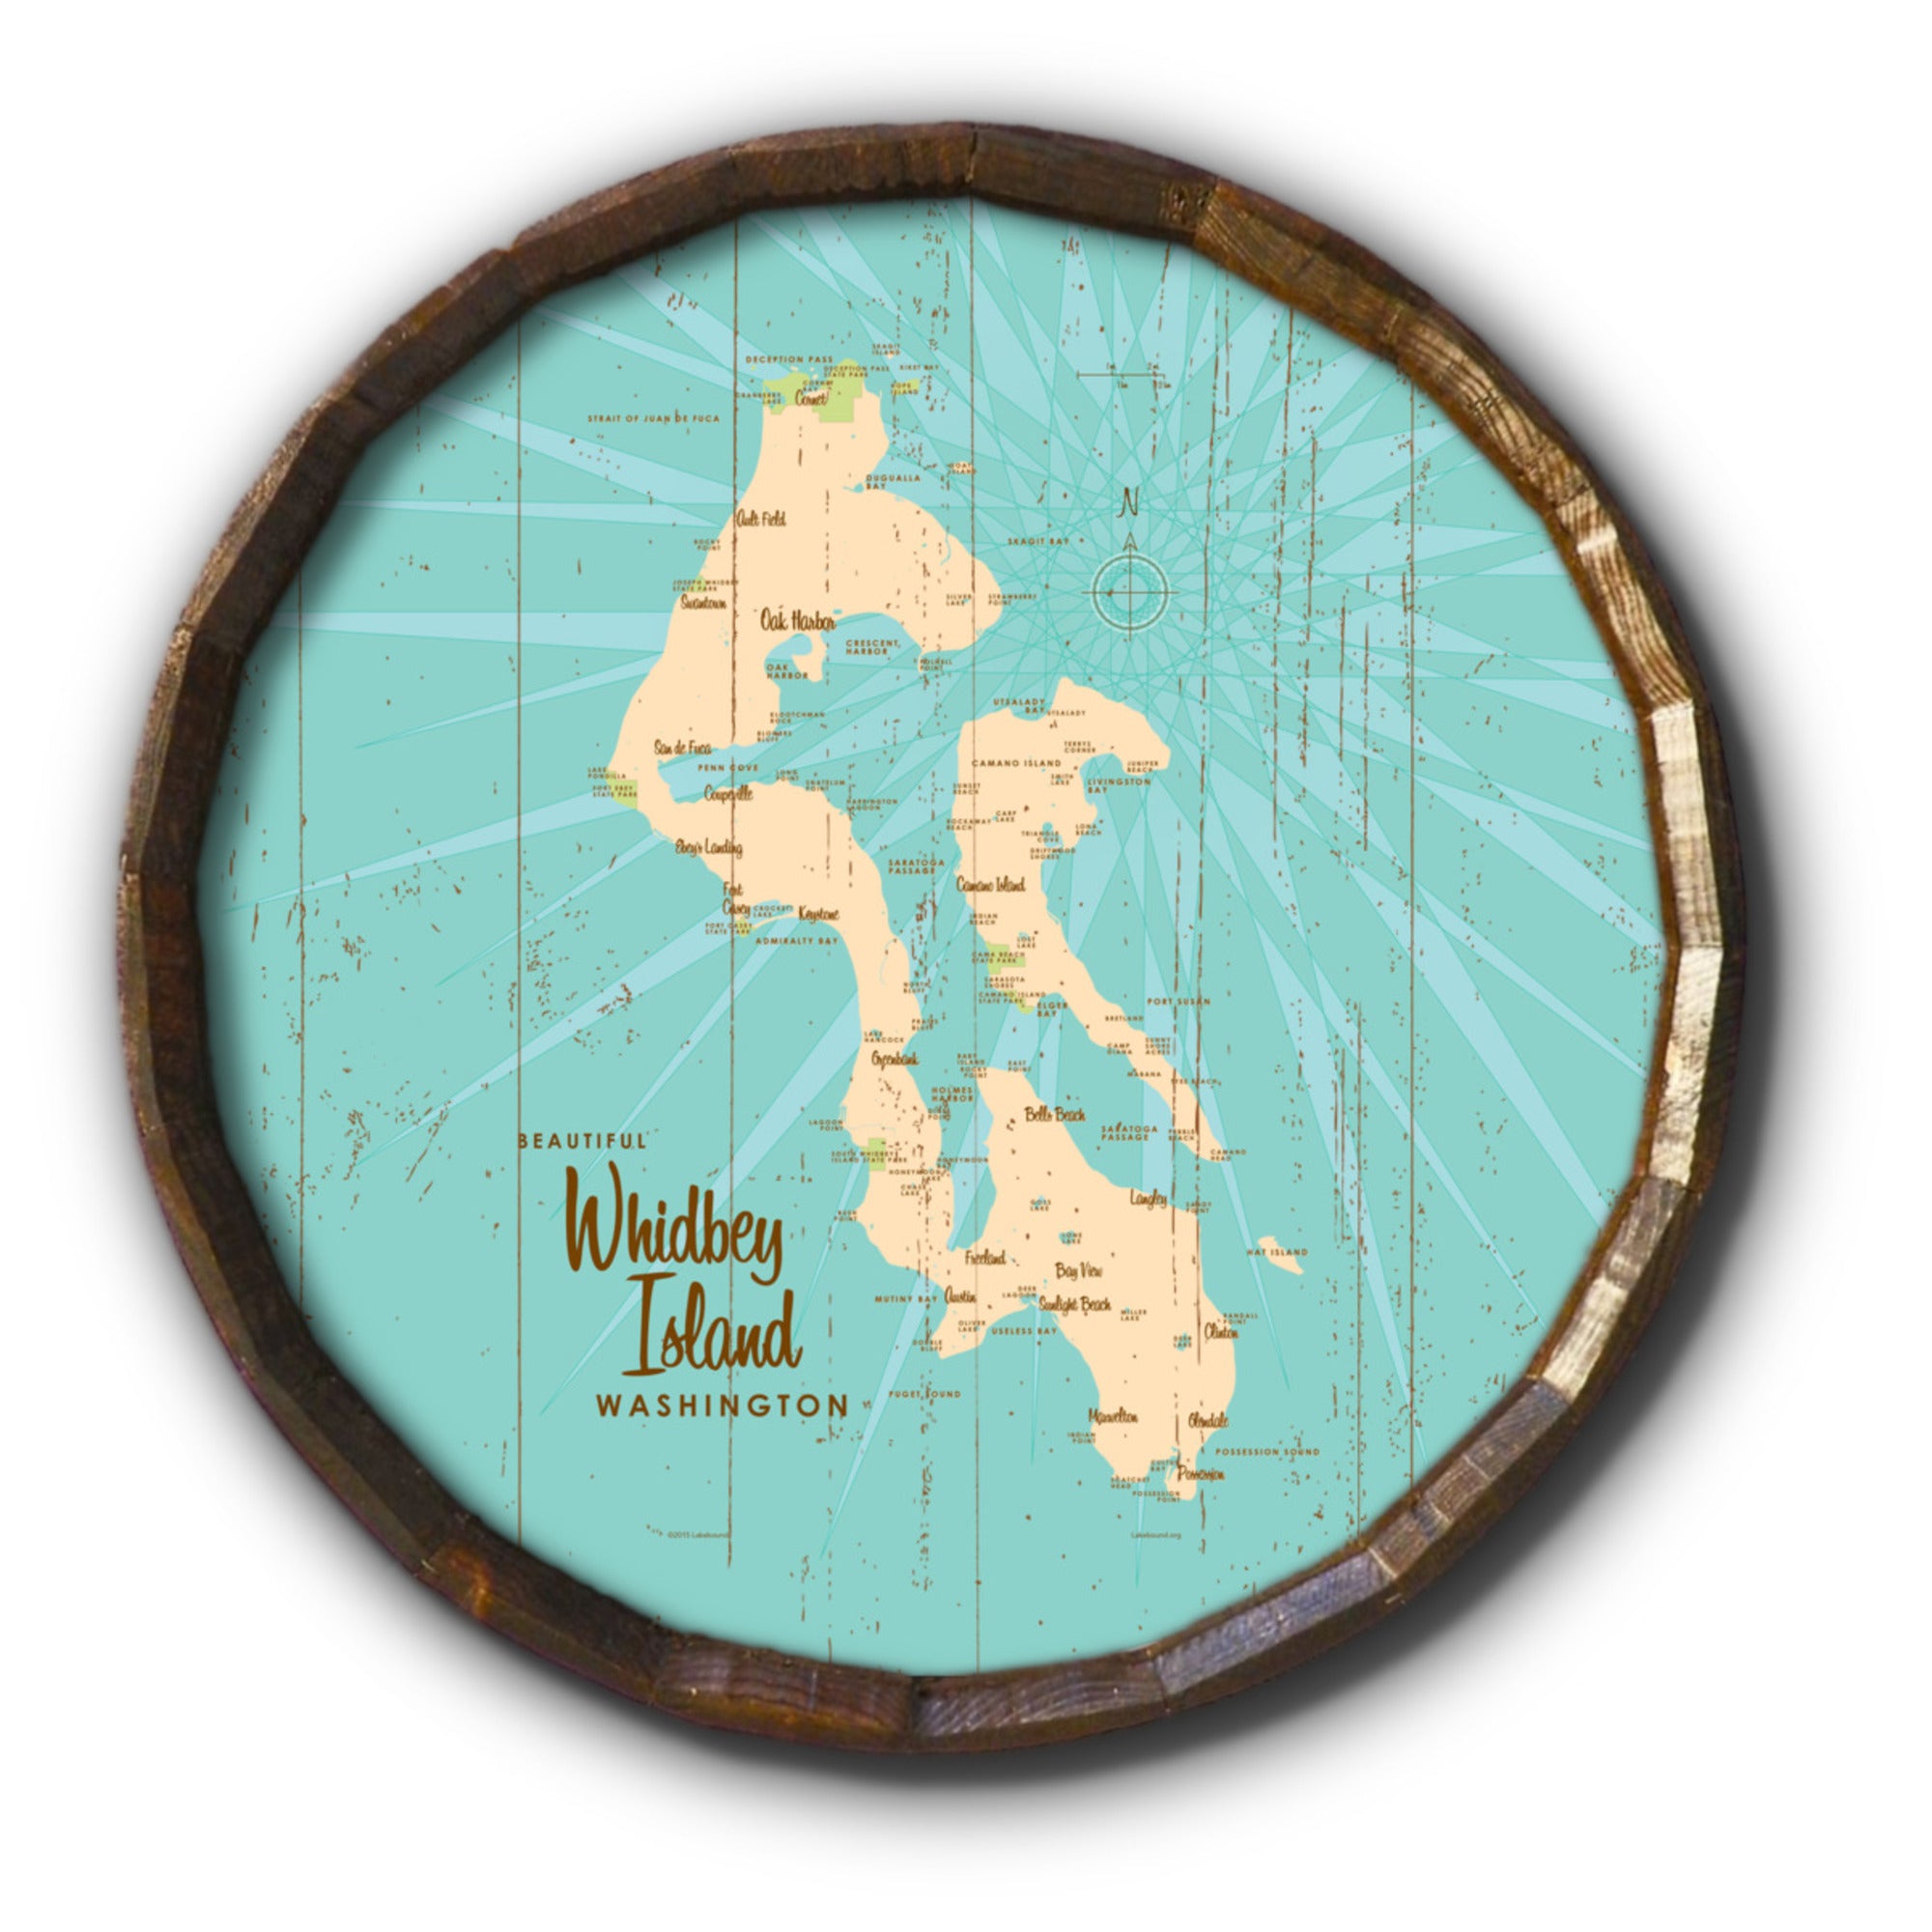 Whidbey Island Washington, Rustic Barrel End Map Art